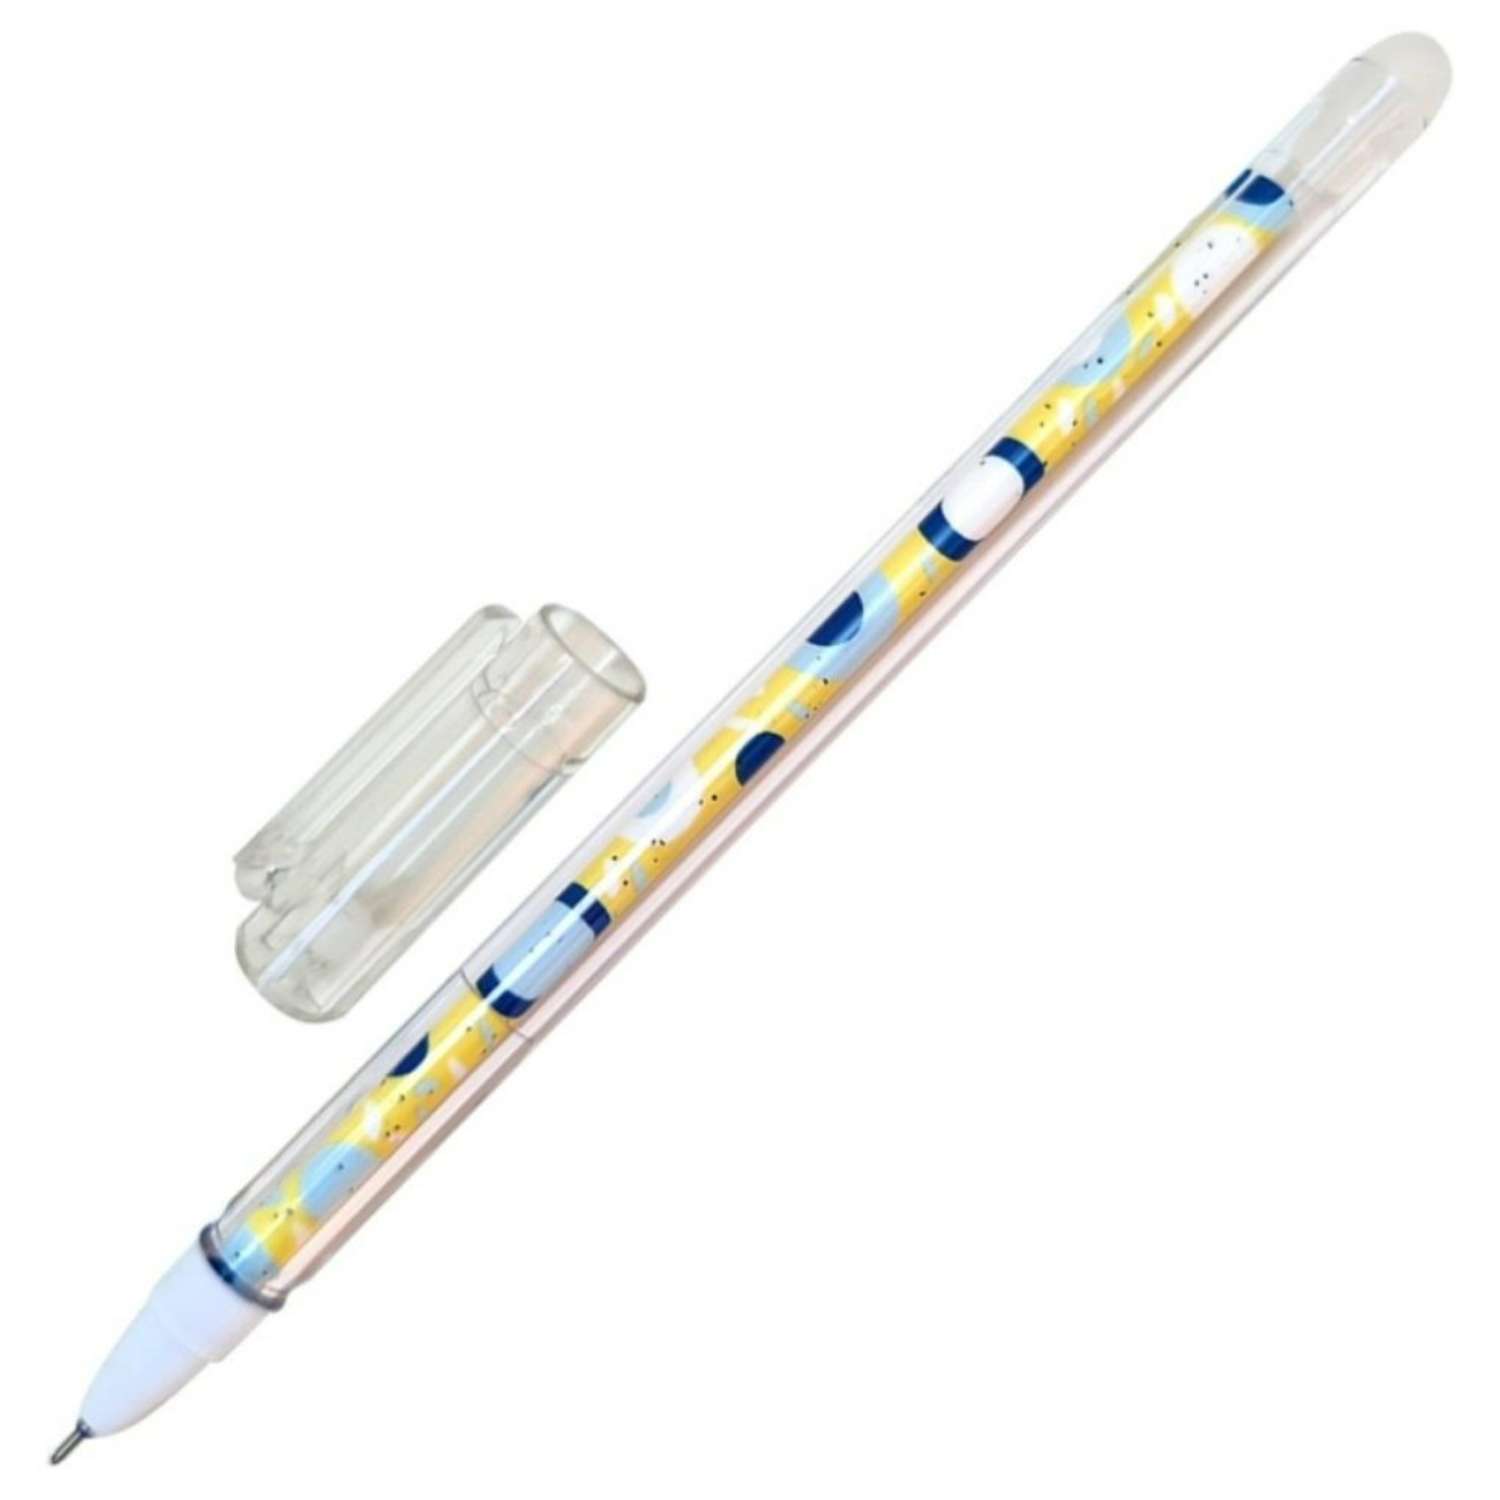 Ручка Be Smart гелевая 0.5 мм синий пиши-стирай bunny 10 штук - фото 1